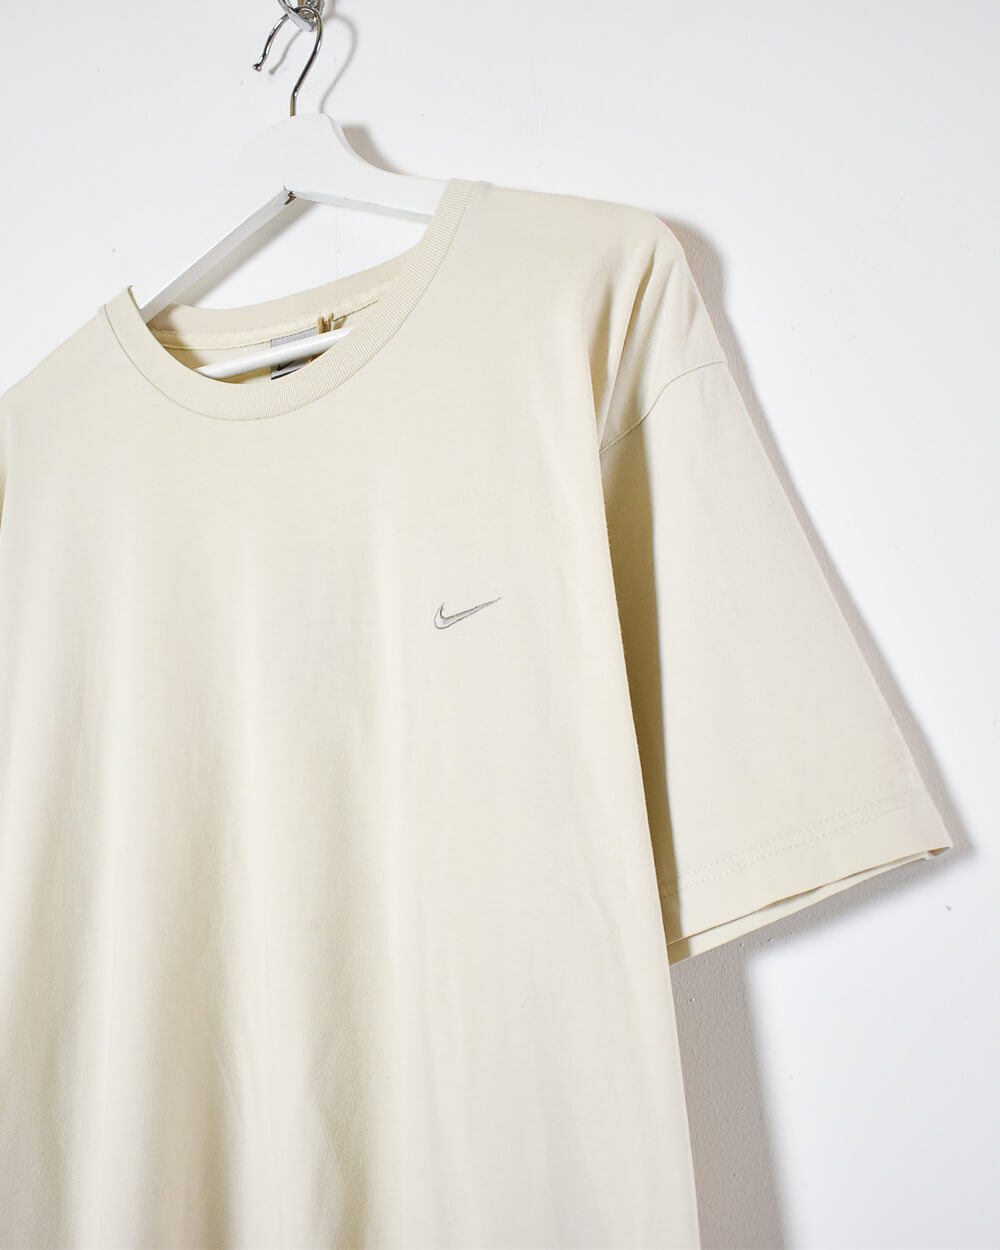 Neutral Nike T-Shirt - X-Large